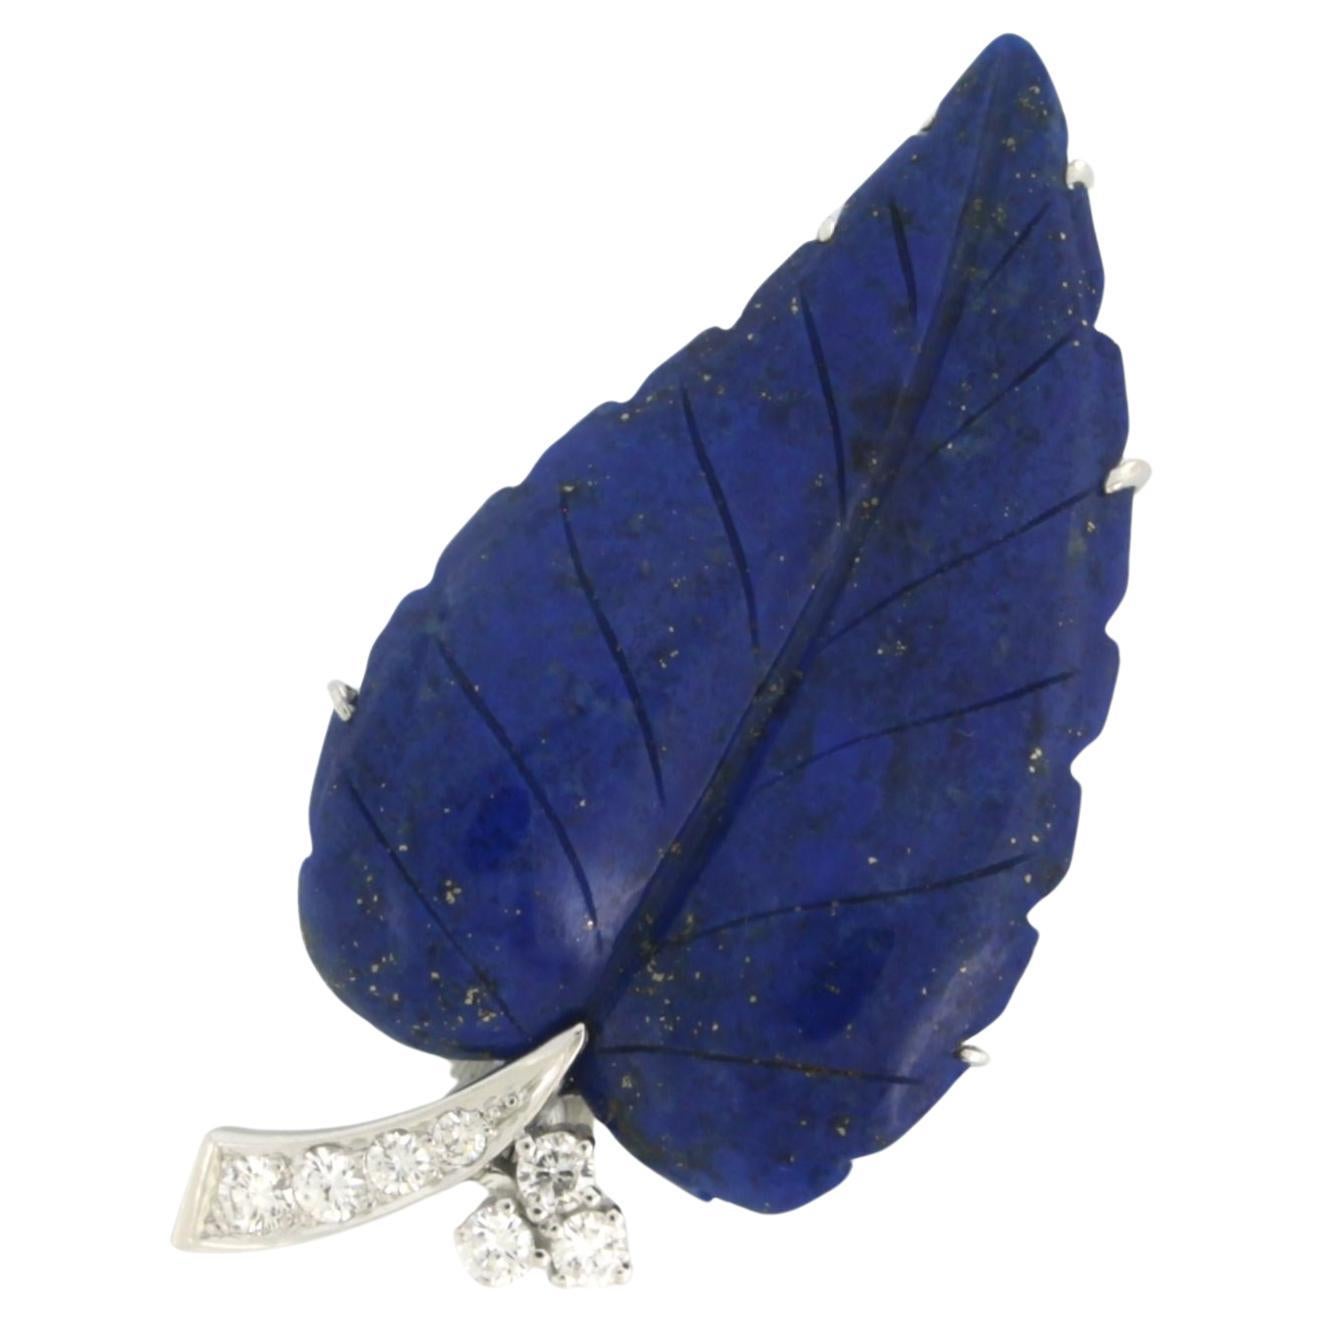 Broche feuille de lapis-lazuli sertie de diamants, or blanc 18 carats